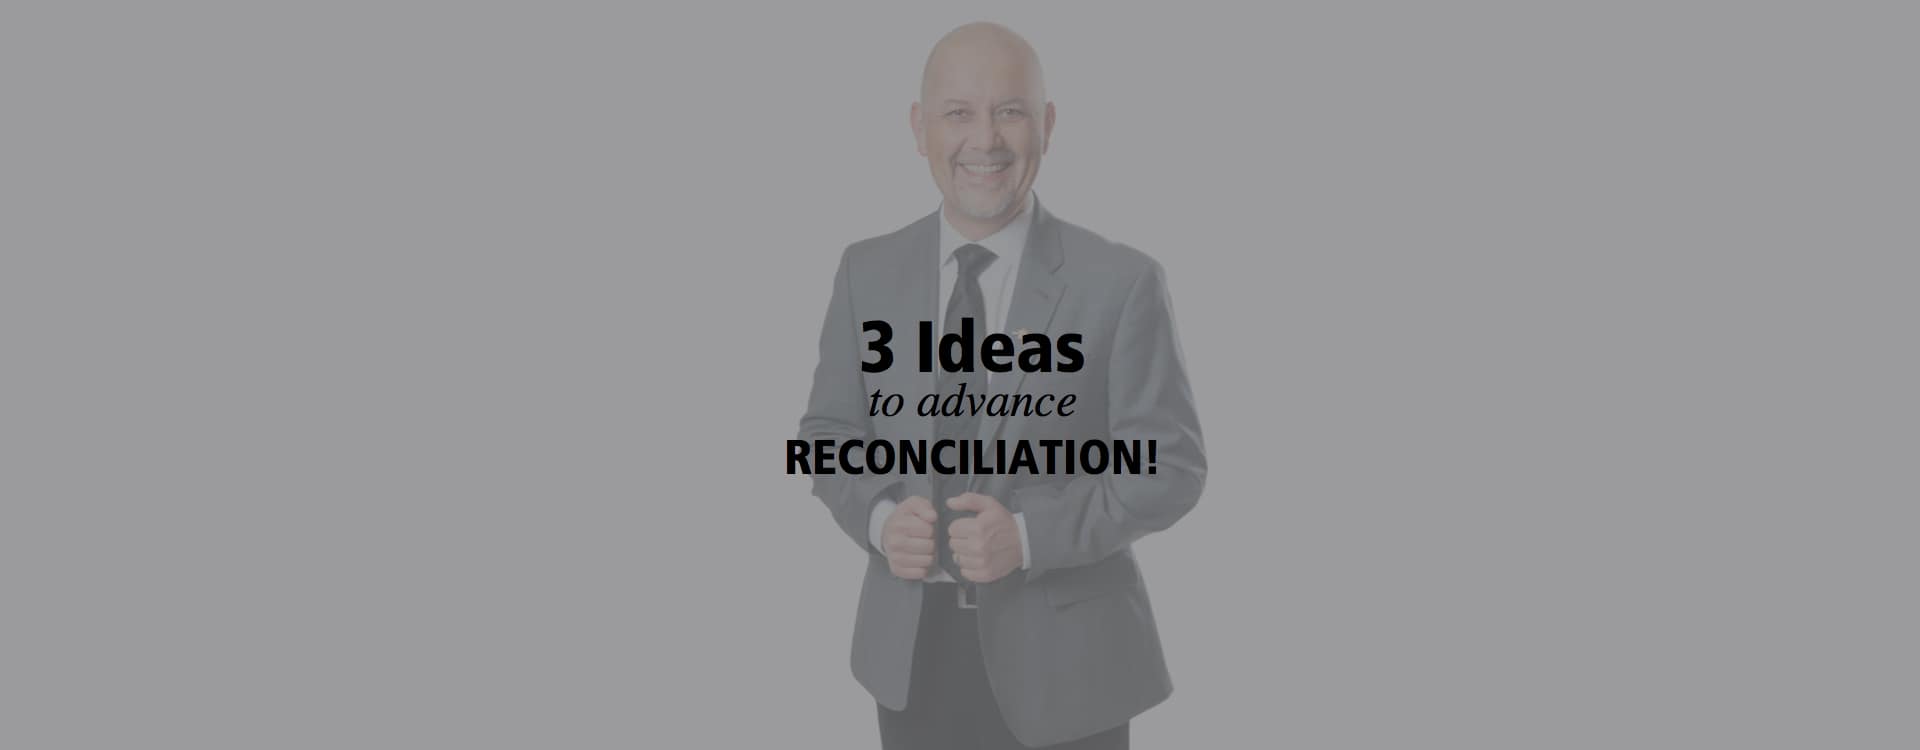 3 Ideas to advance reconciliation